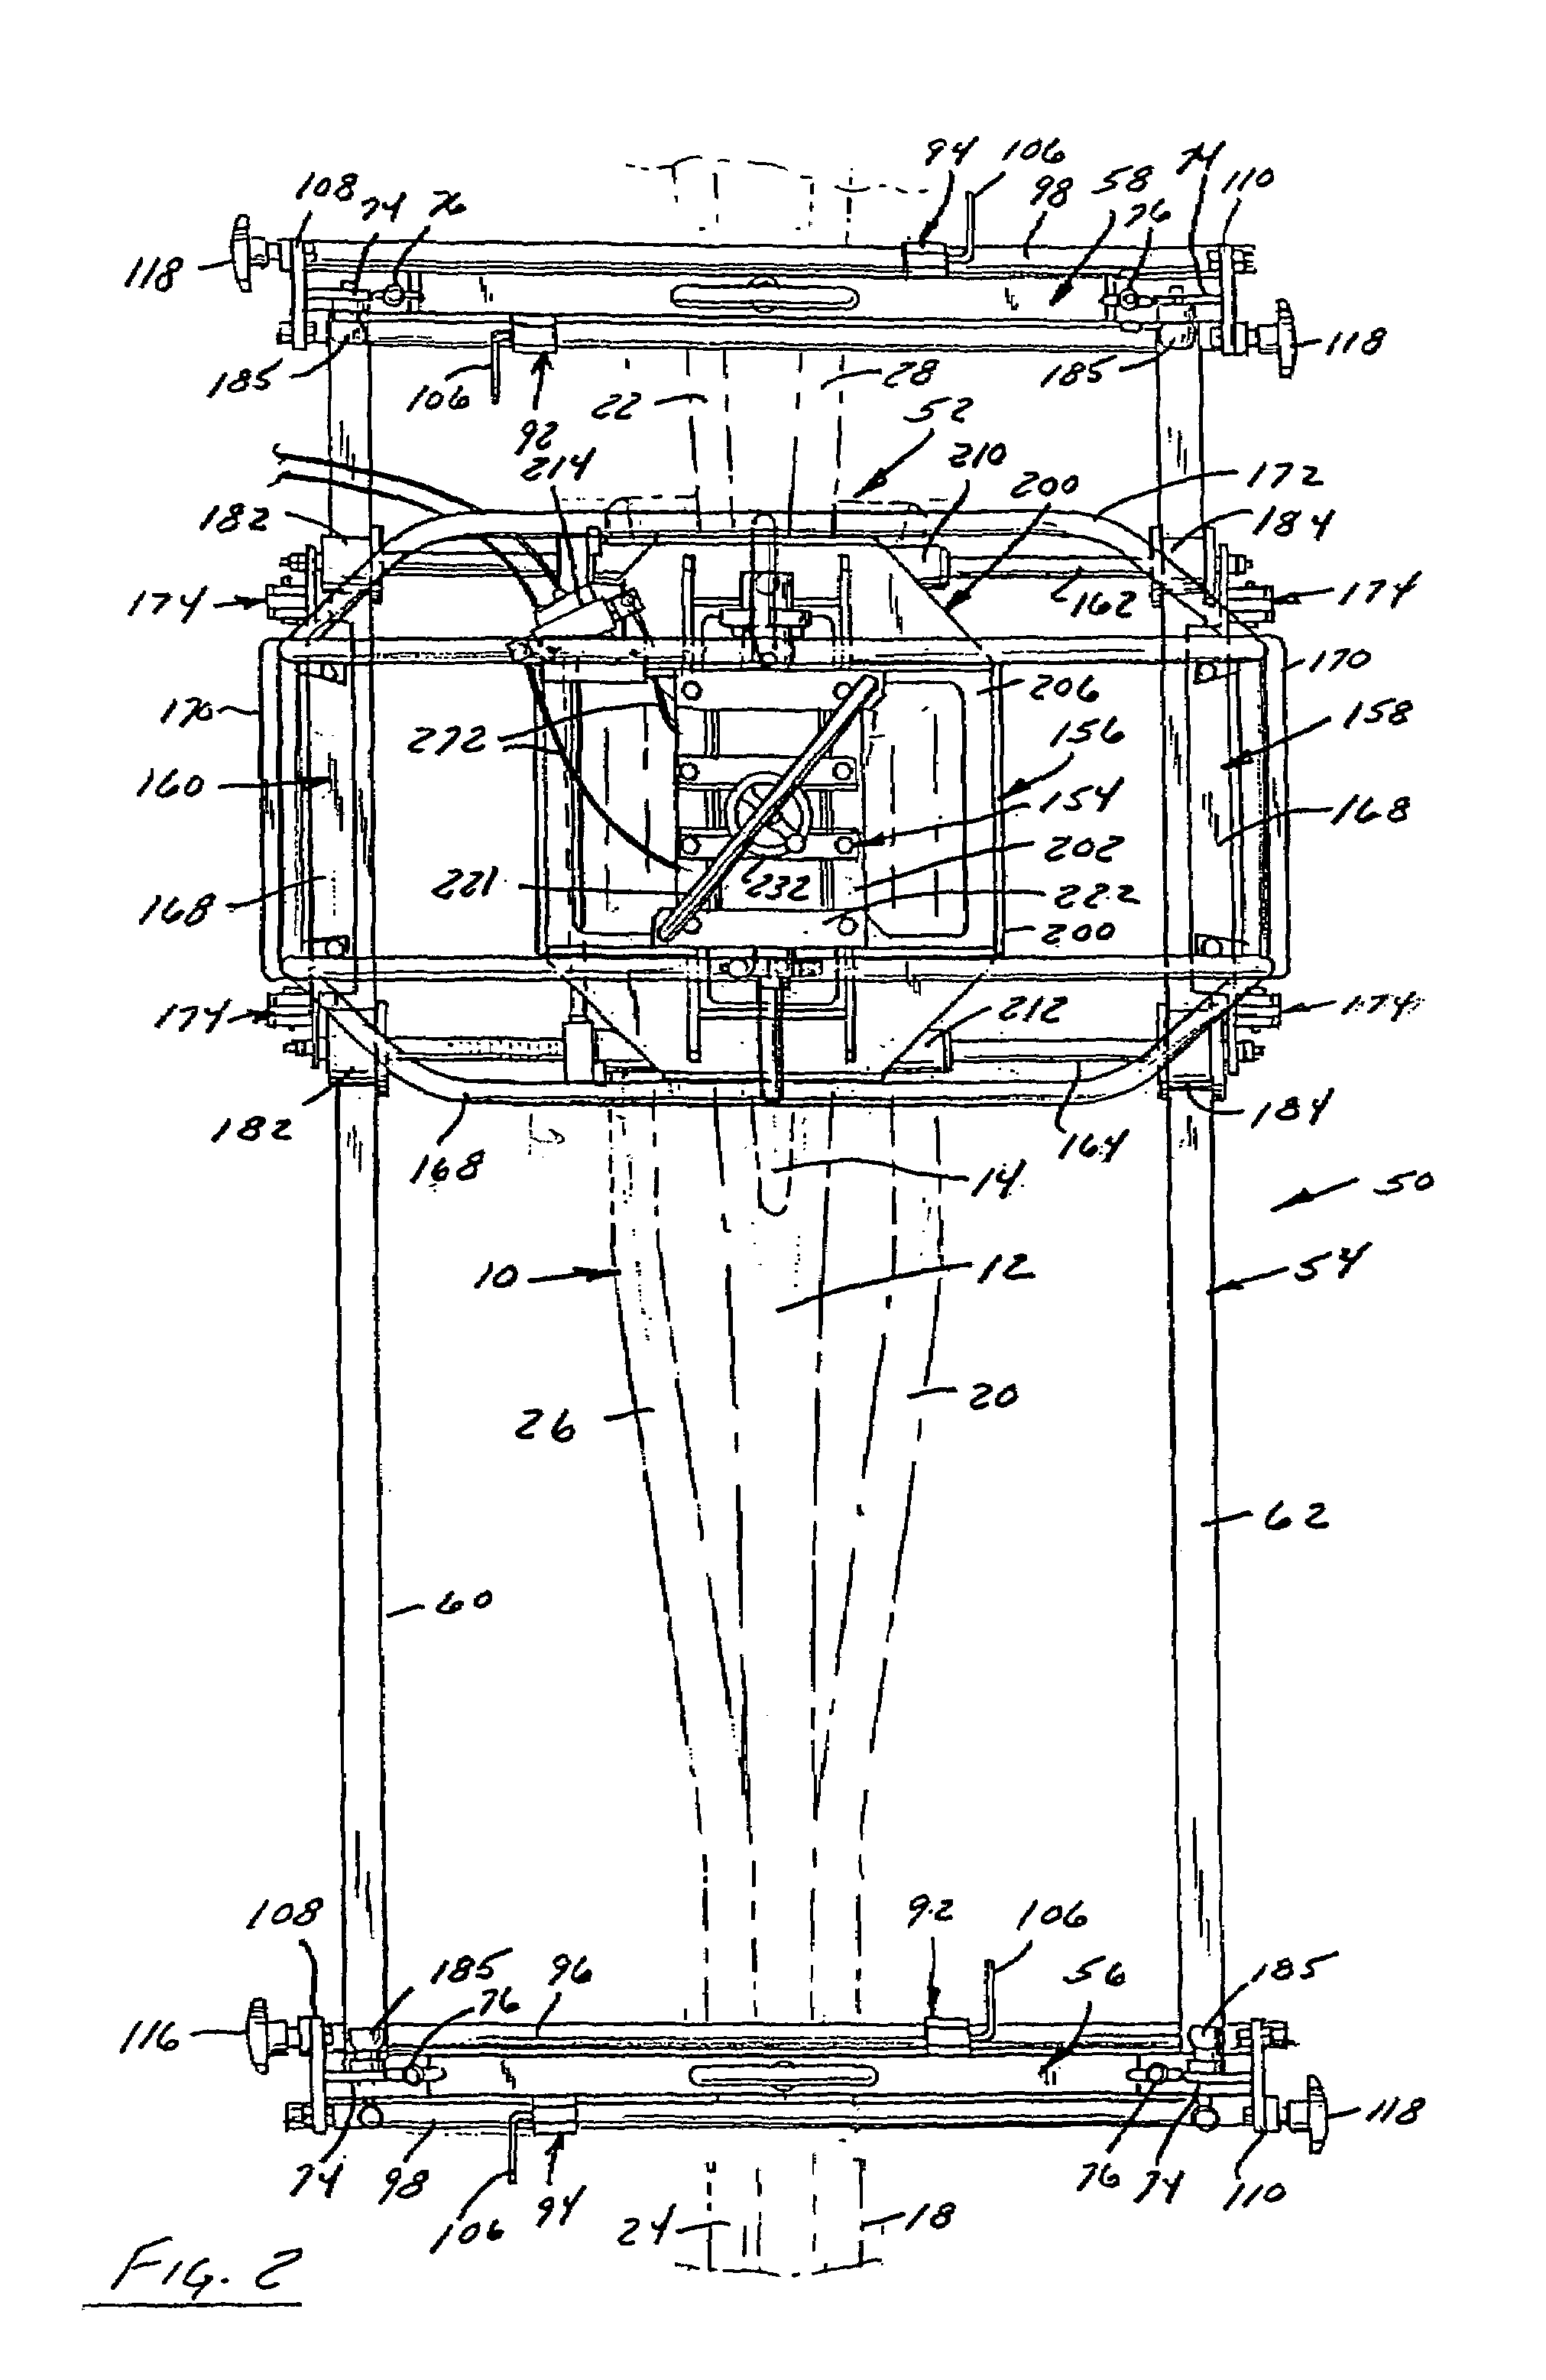 Railway grinder